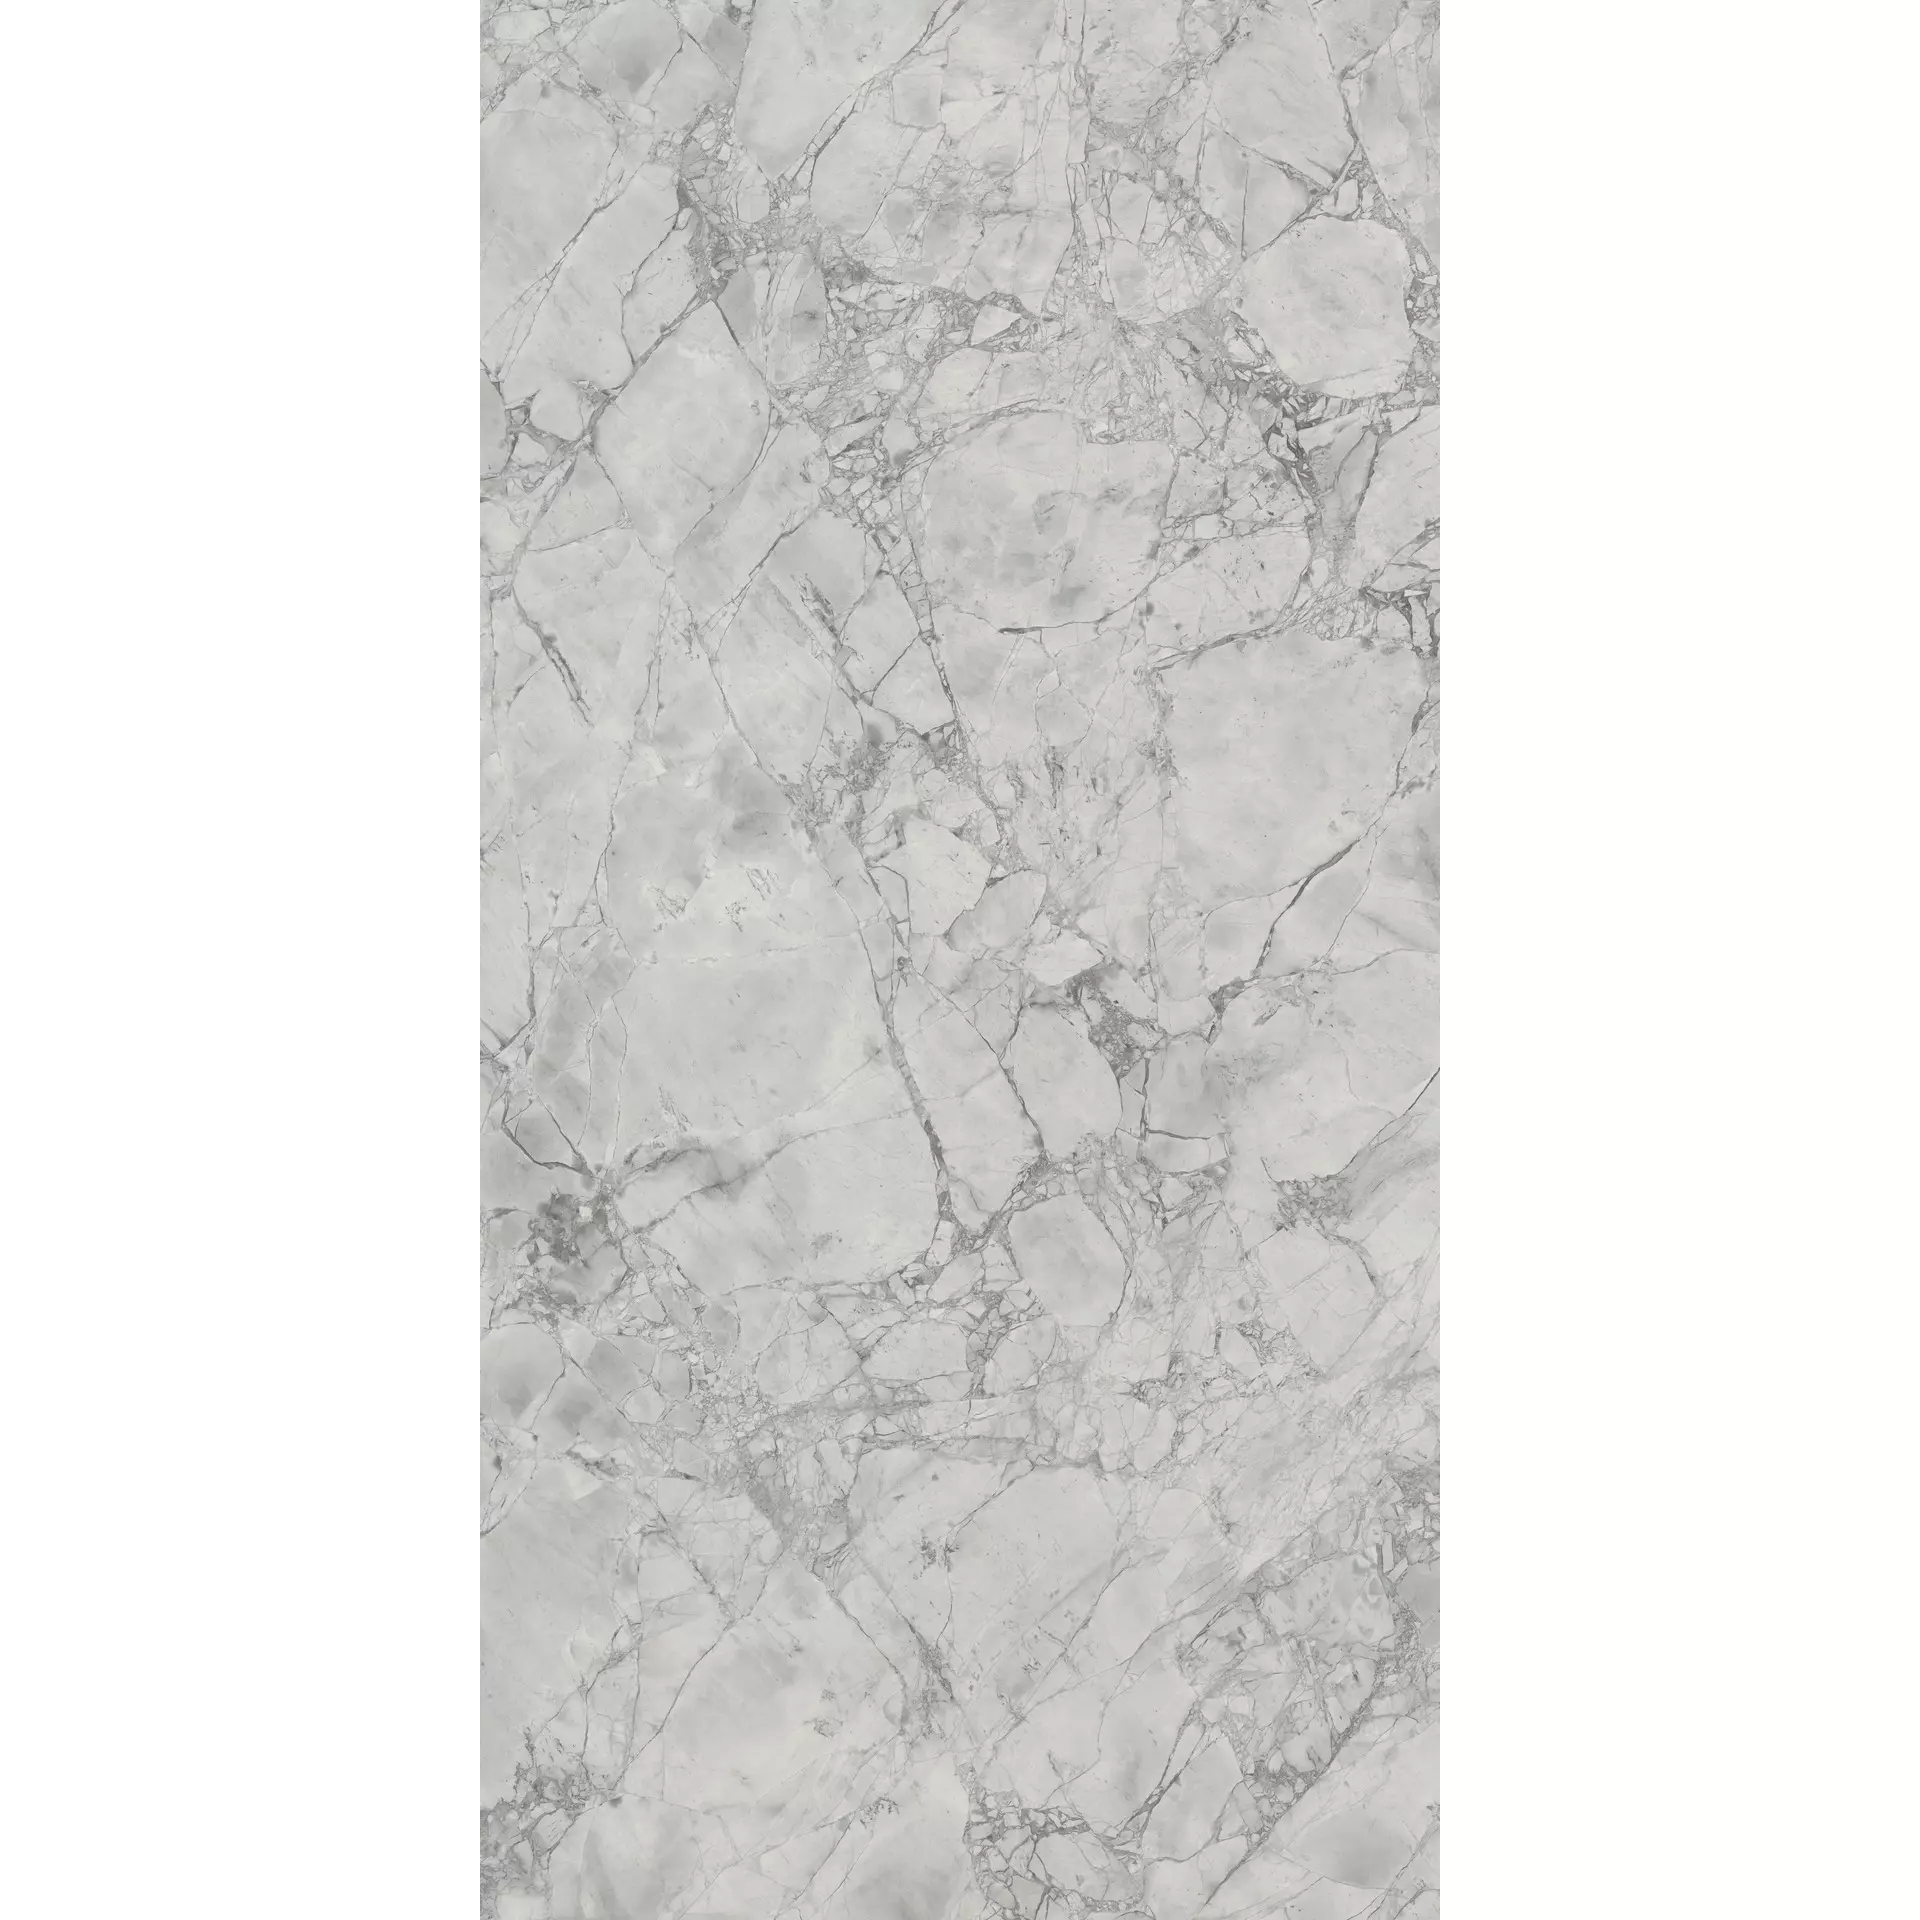 Marazzi Grande Marble Look Calacatta Superwhite Satinato MF8N 160x320cm rectified 6mm